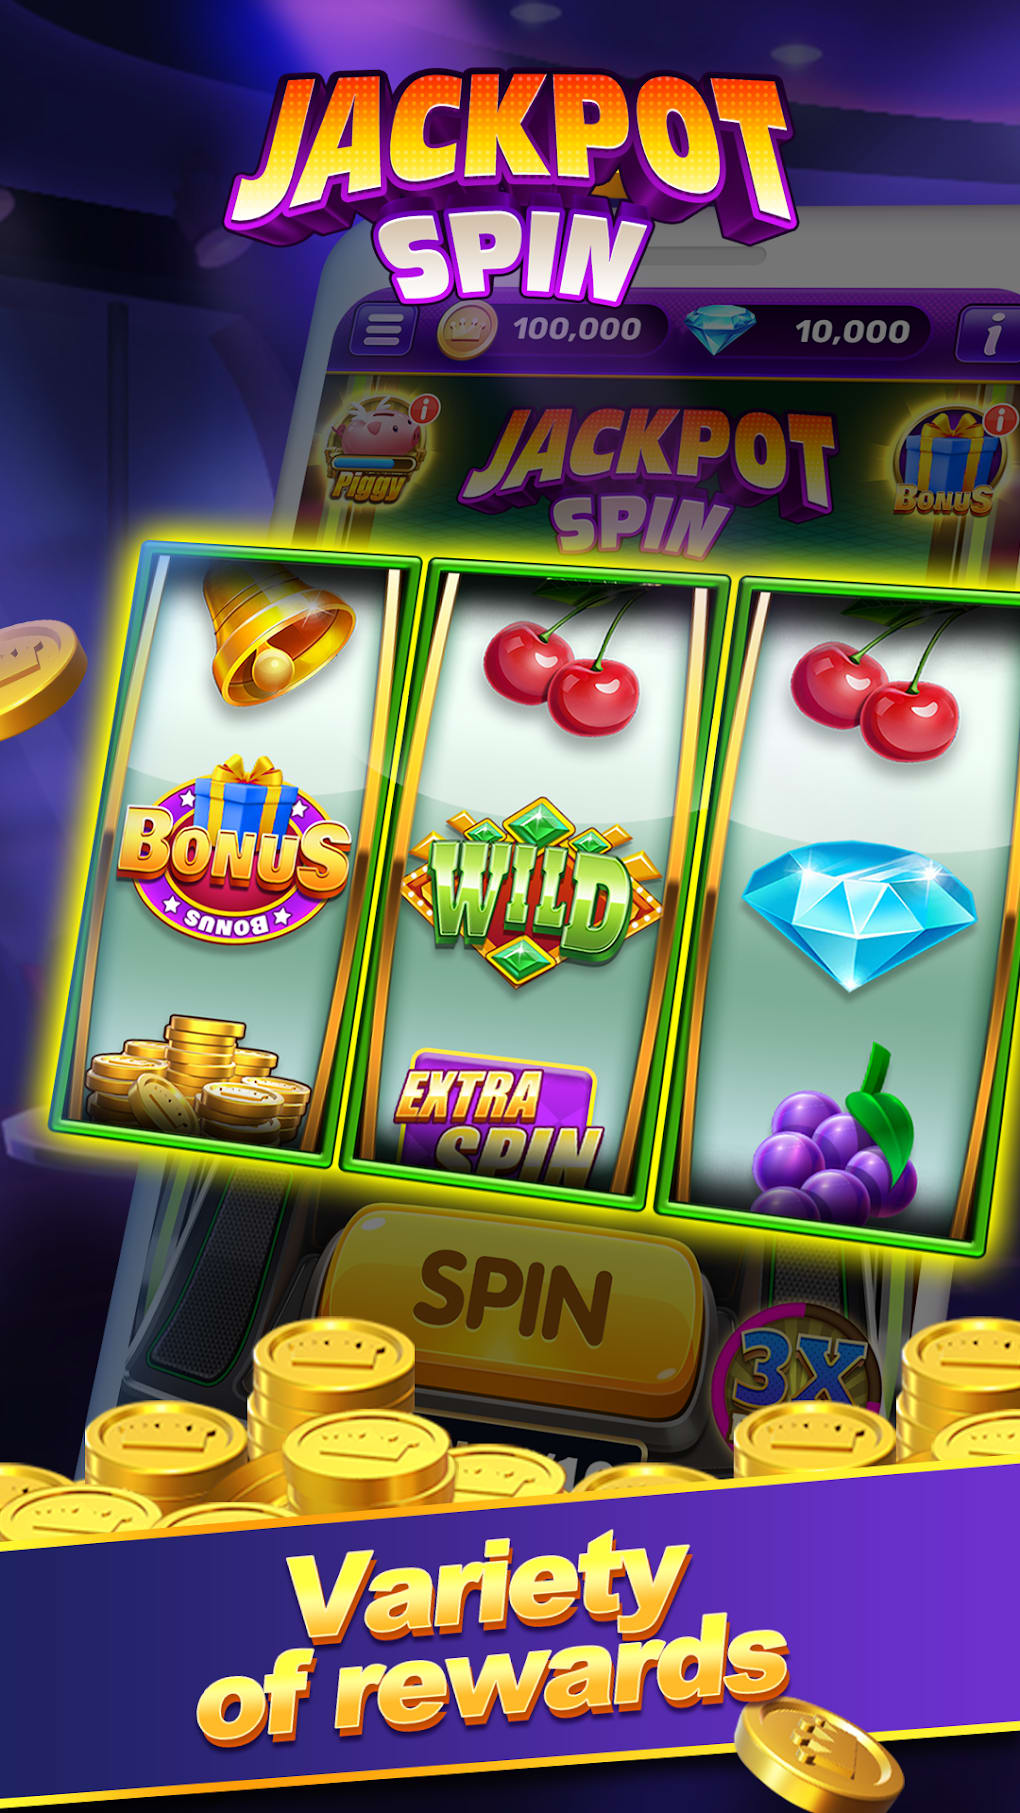 wild jack online casino